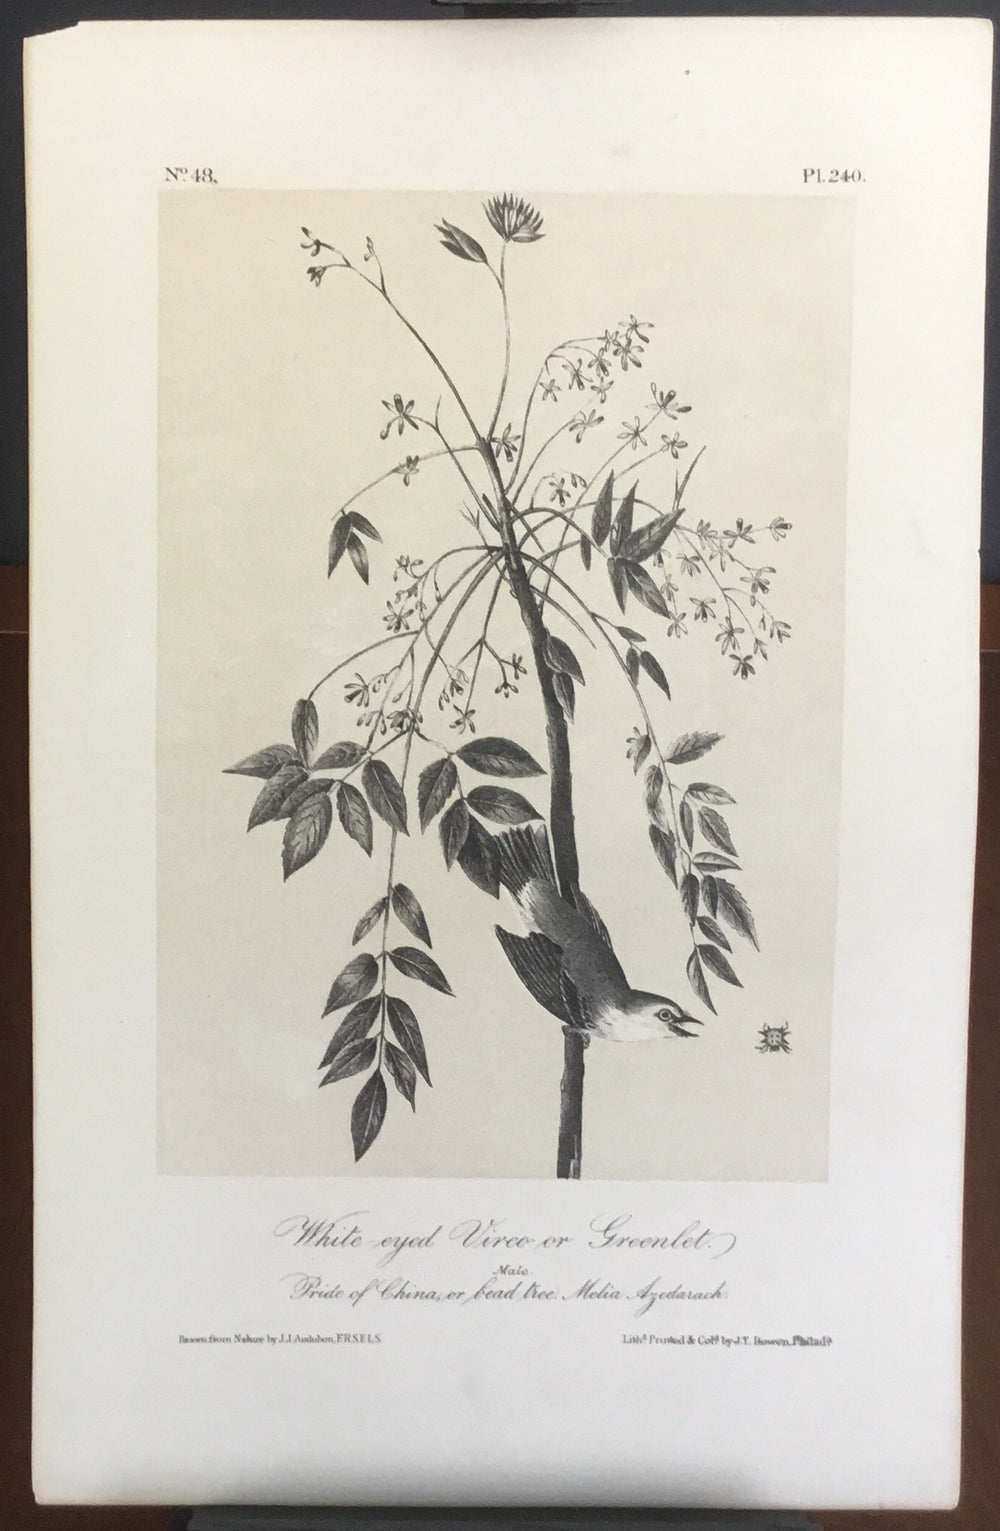 Audubon Octavo White-eyed Vireo or Greenlet (2), plate 240, uncolored test sheet, 7 x 11